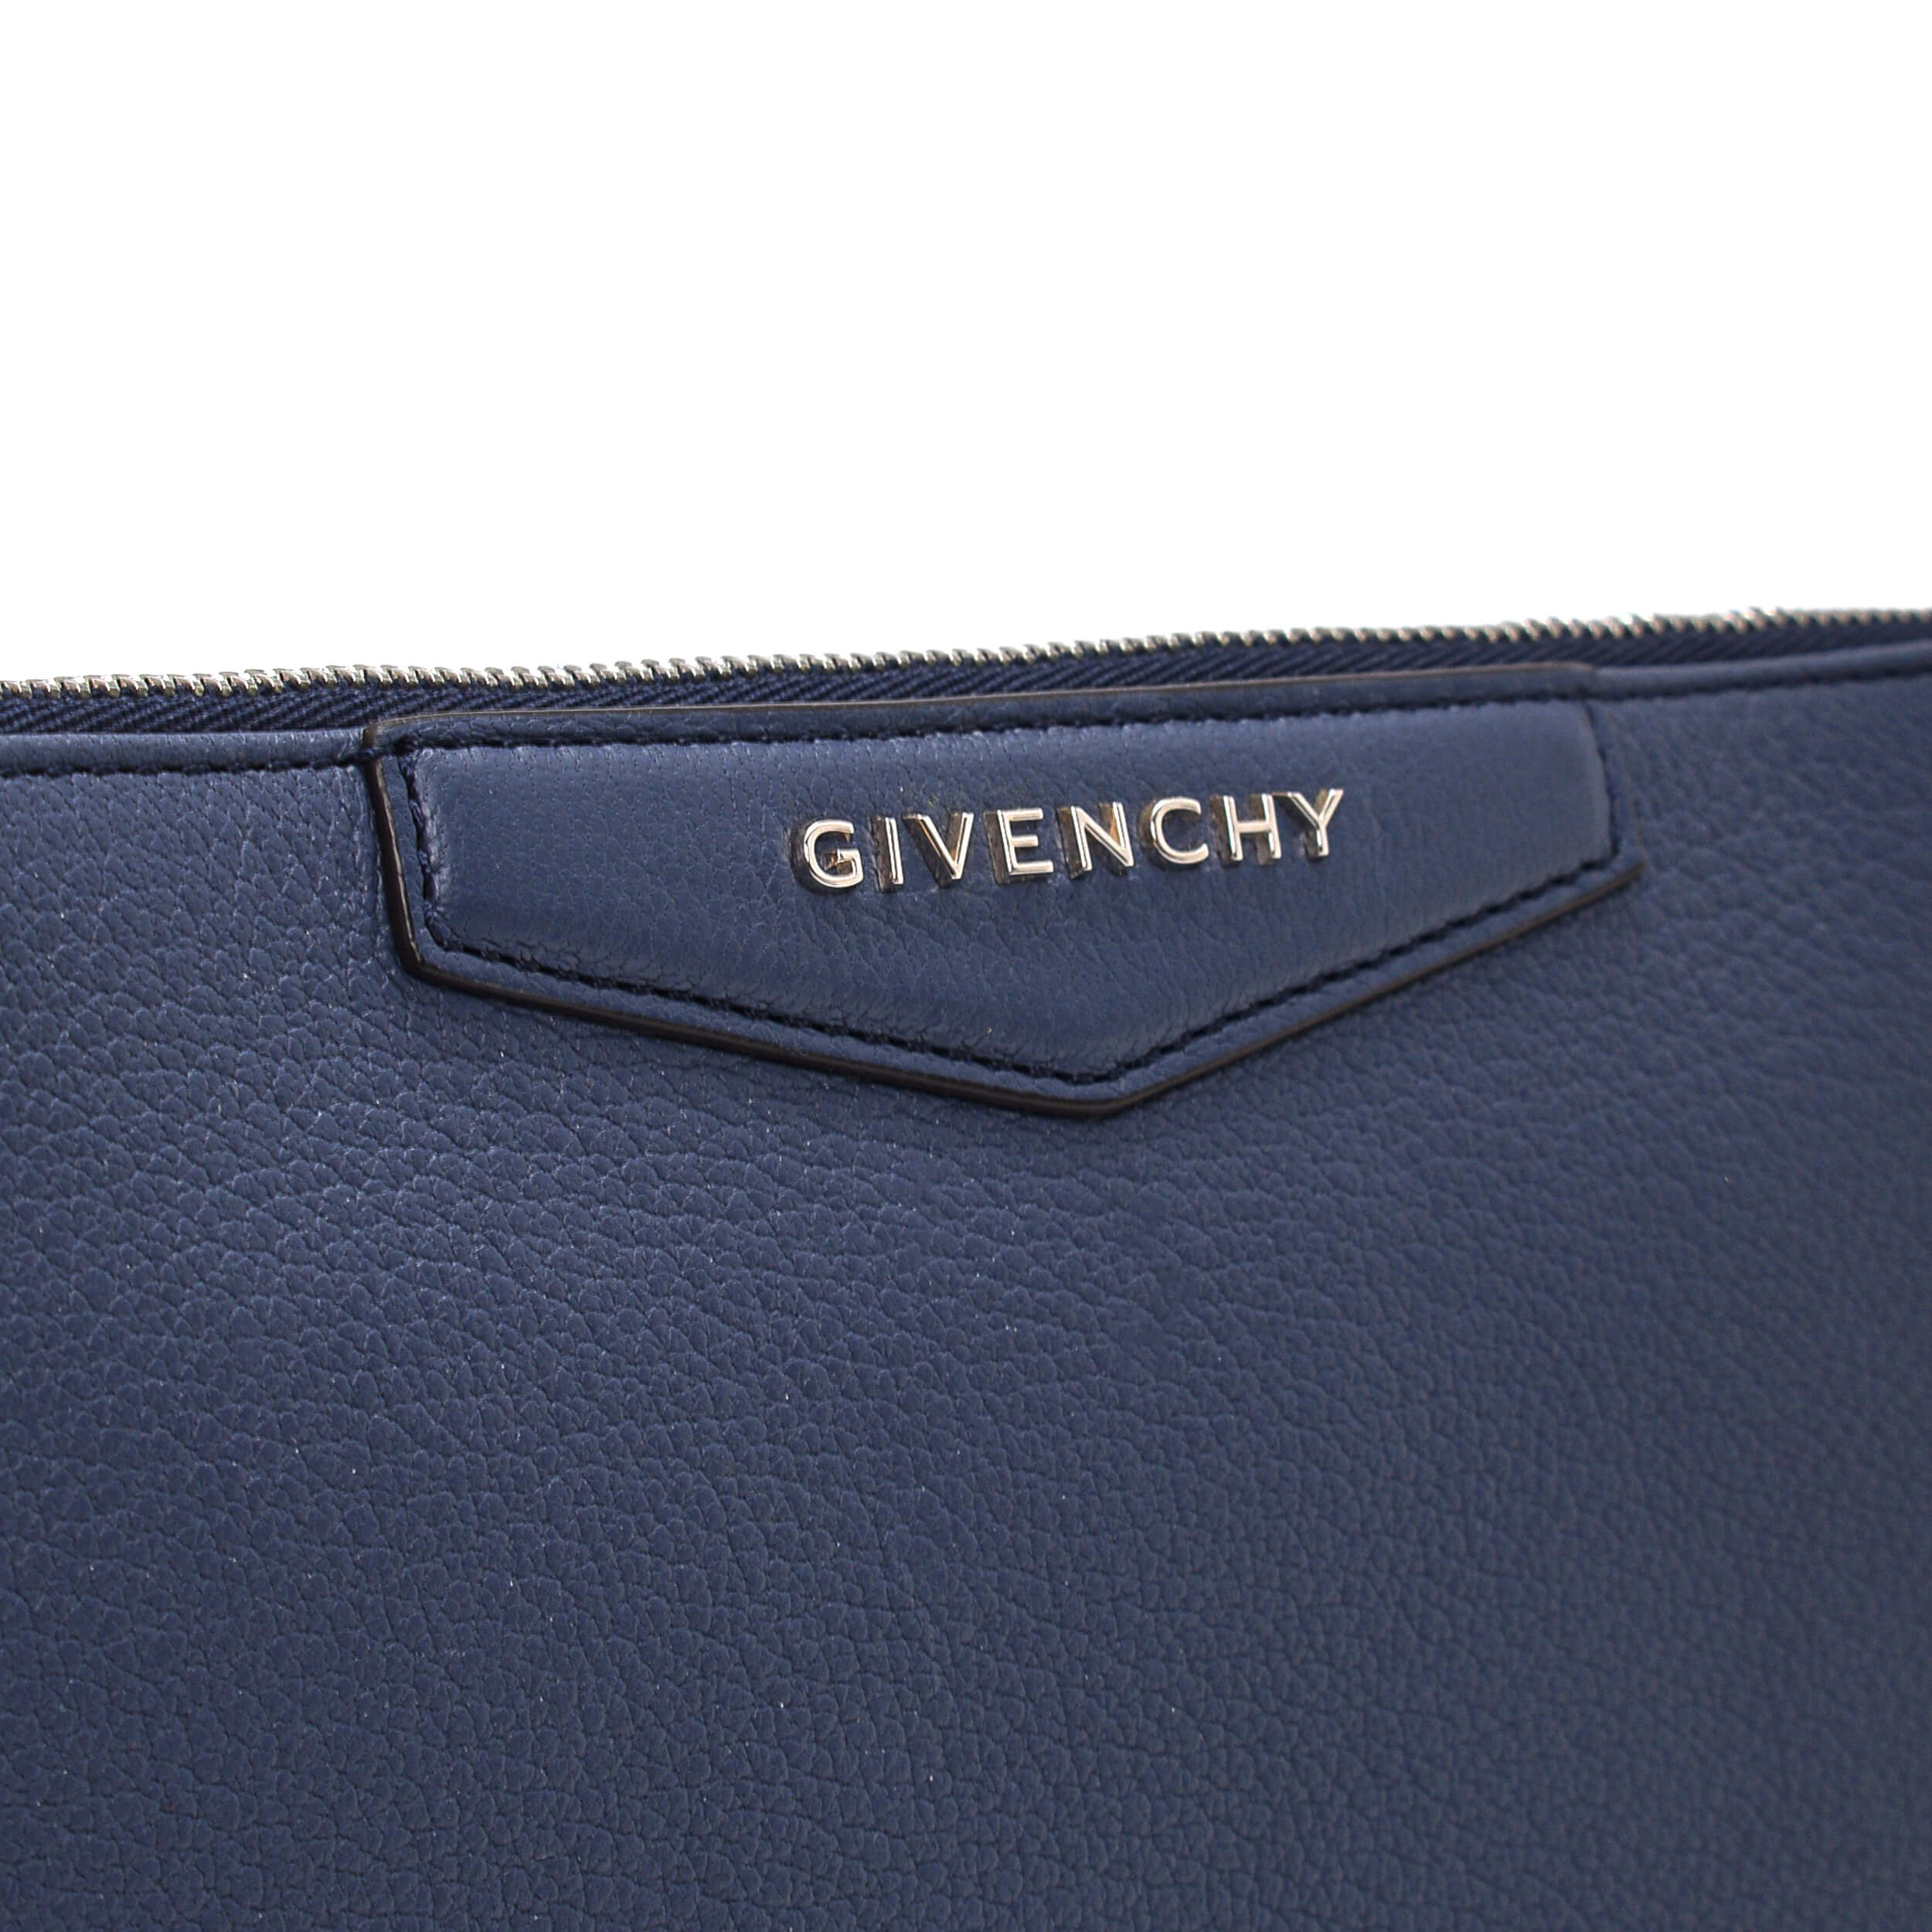 Givenchy - Navy Blue Leather Antigona Zipped Clutch II